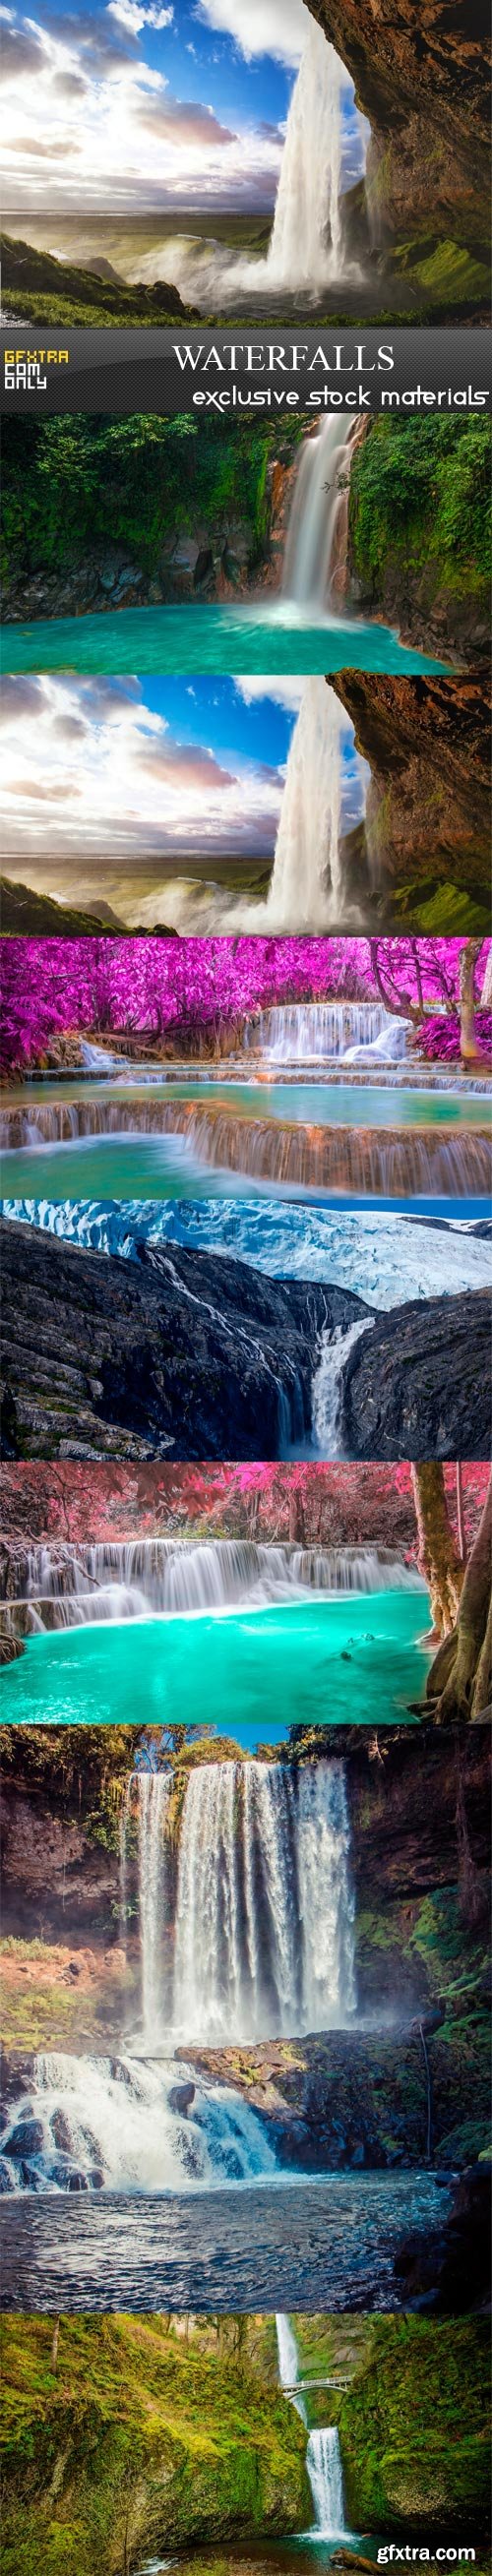 Waterfalls-8 UHQ JPEG